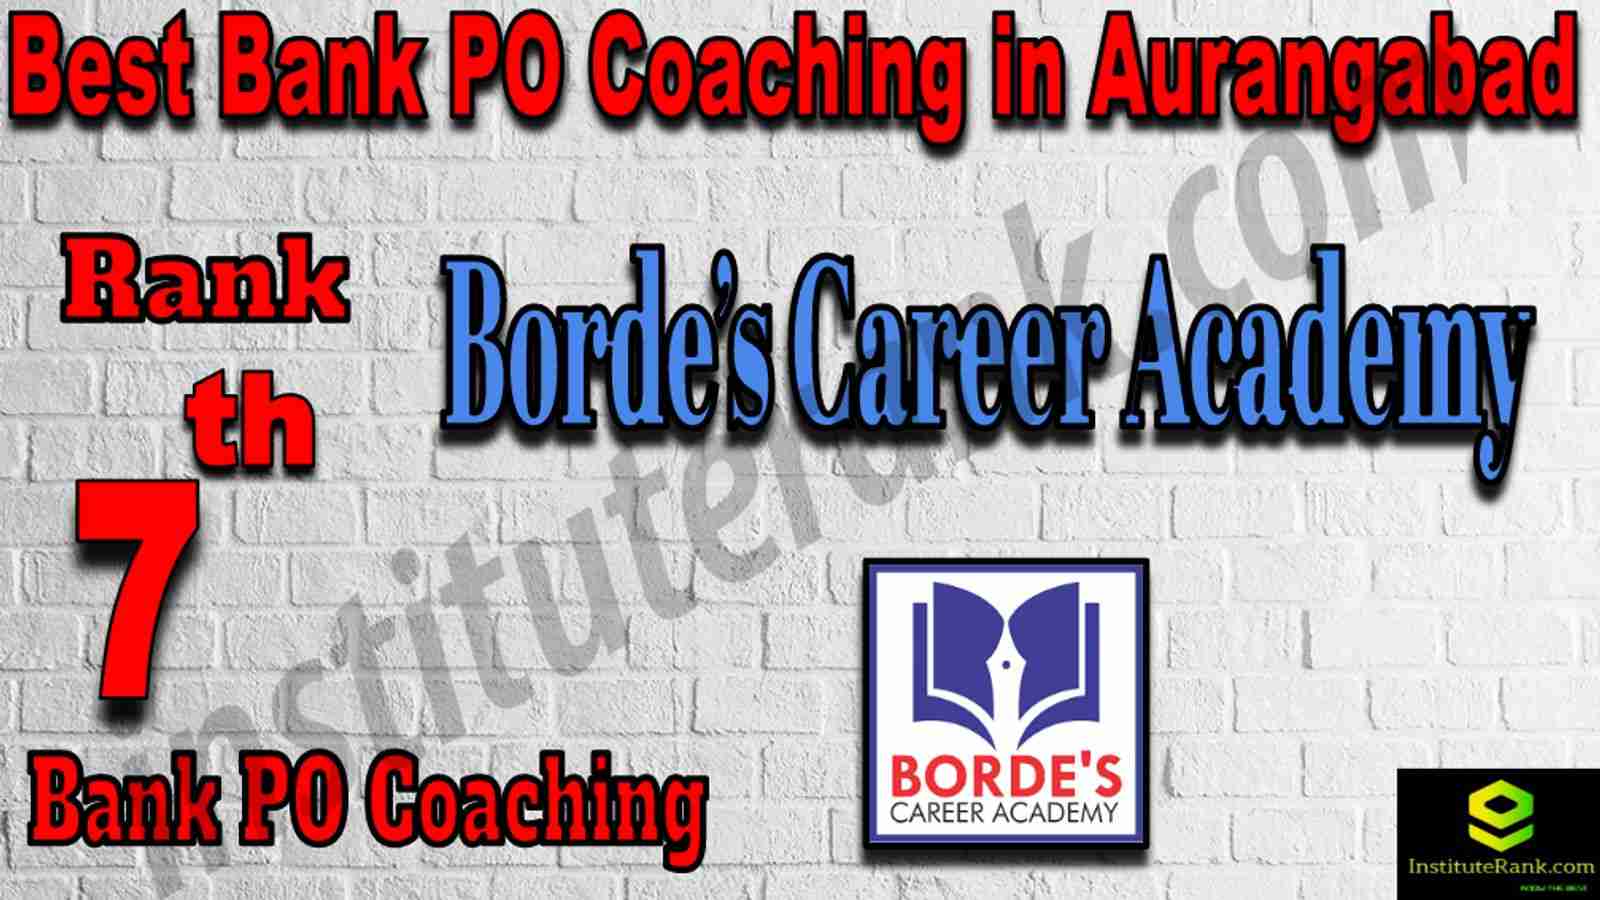 7th Best Bank PO Coaching in Aurangabad